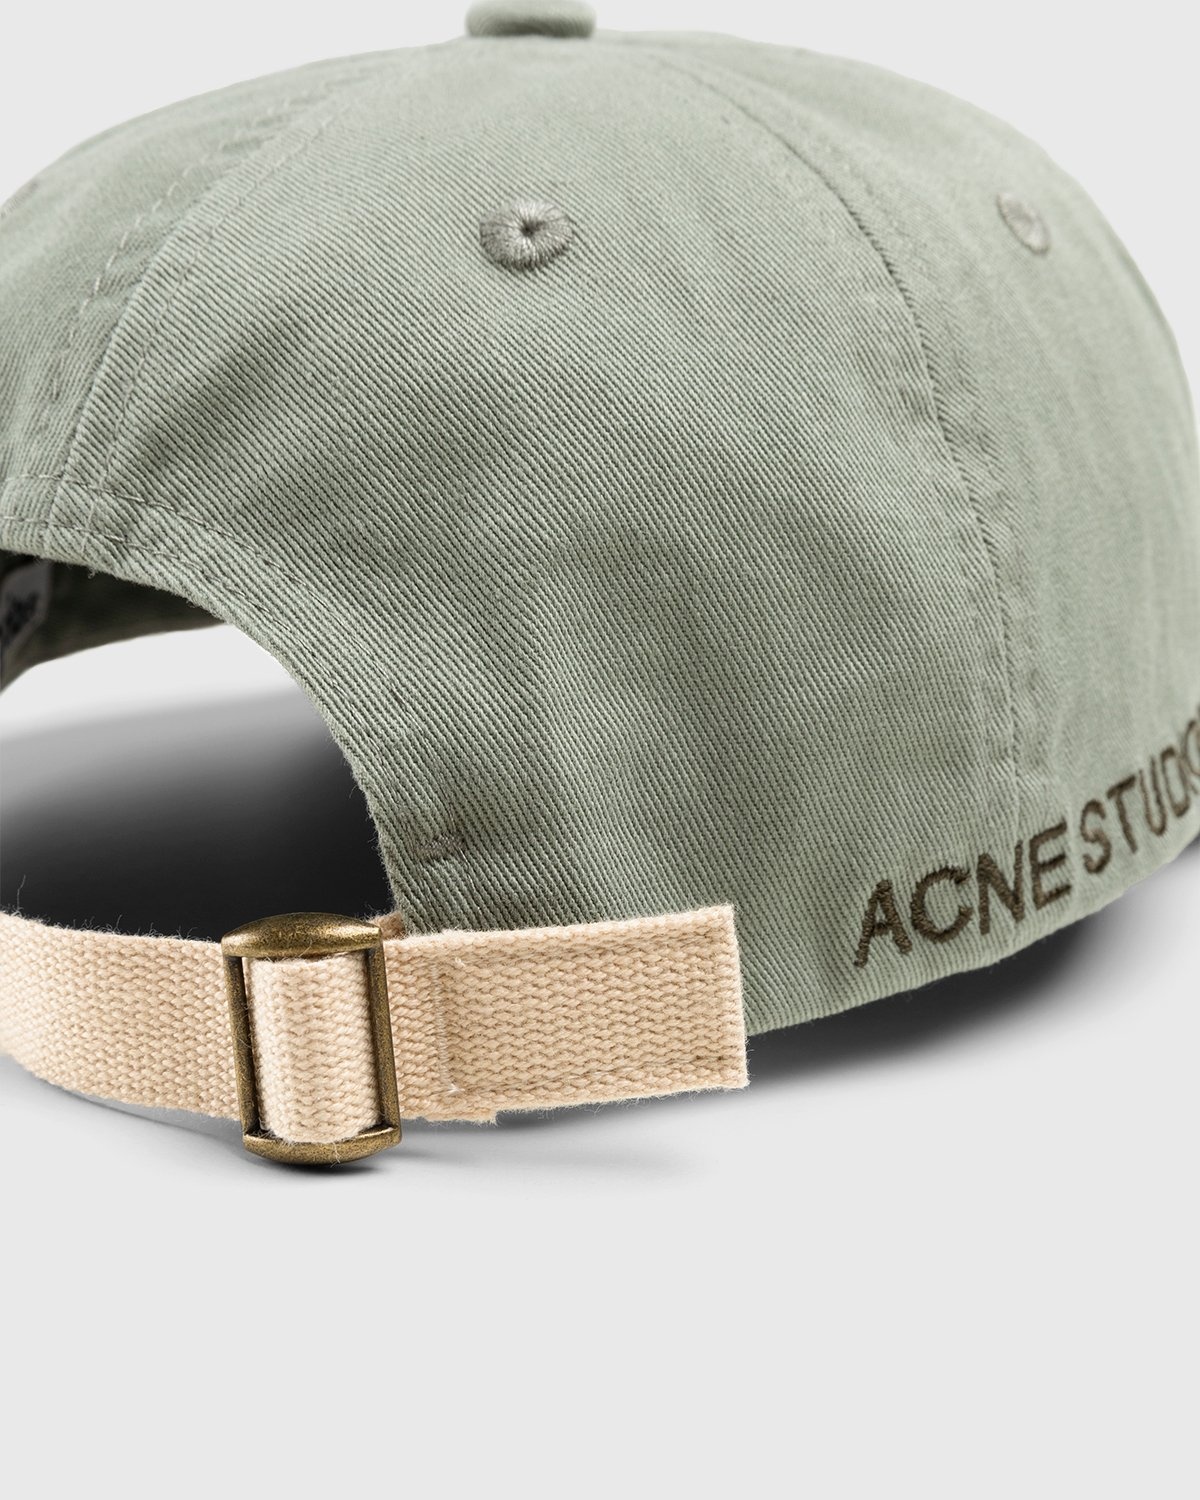 Acne Studios – Cotton Baseball Cap Sage Green - Hats - Green - Image 4